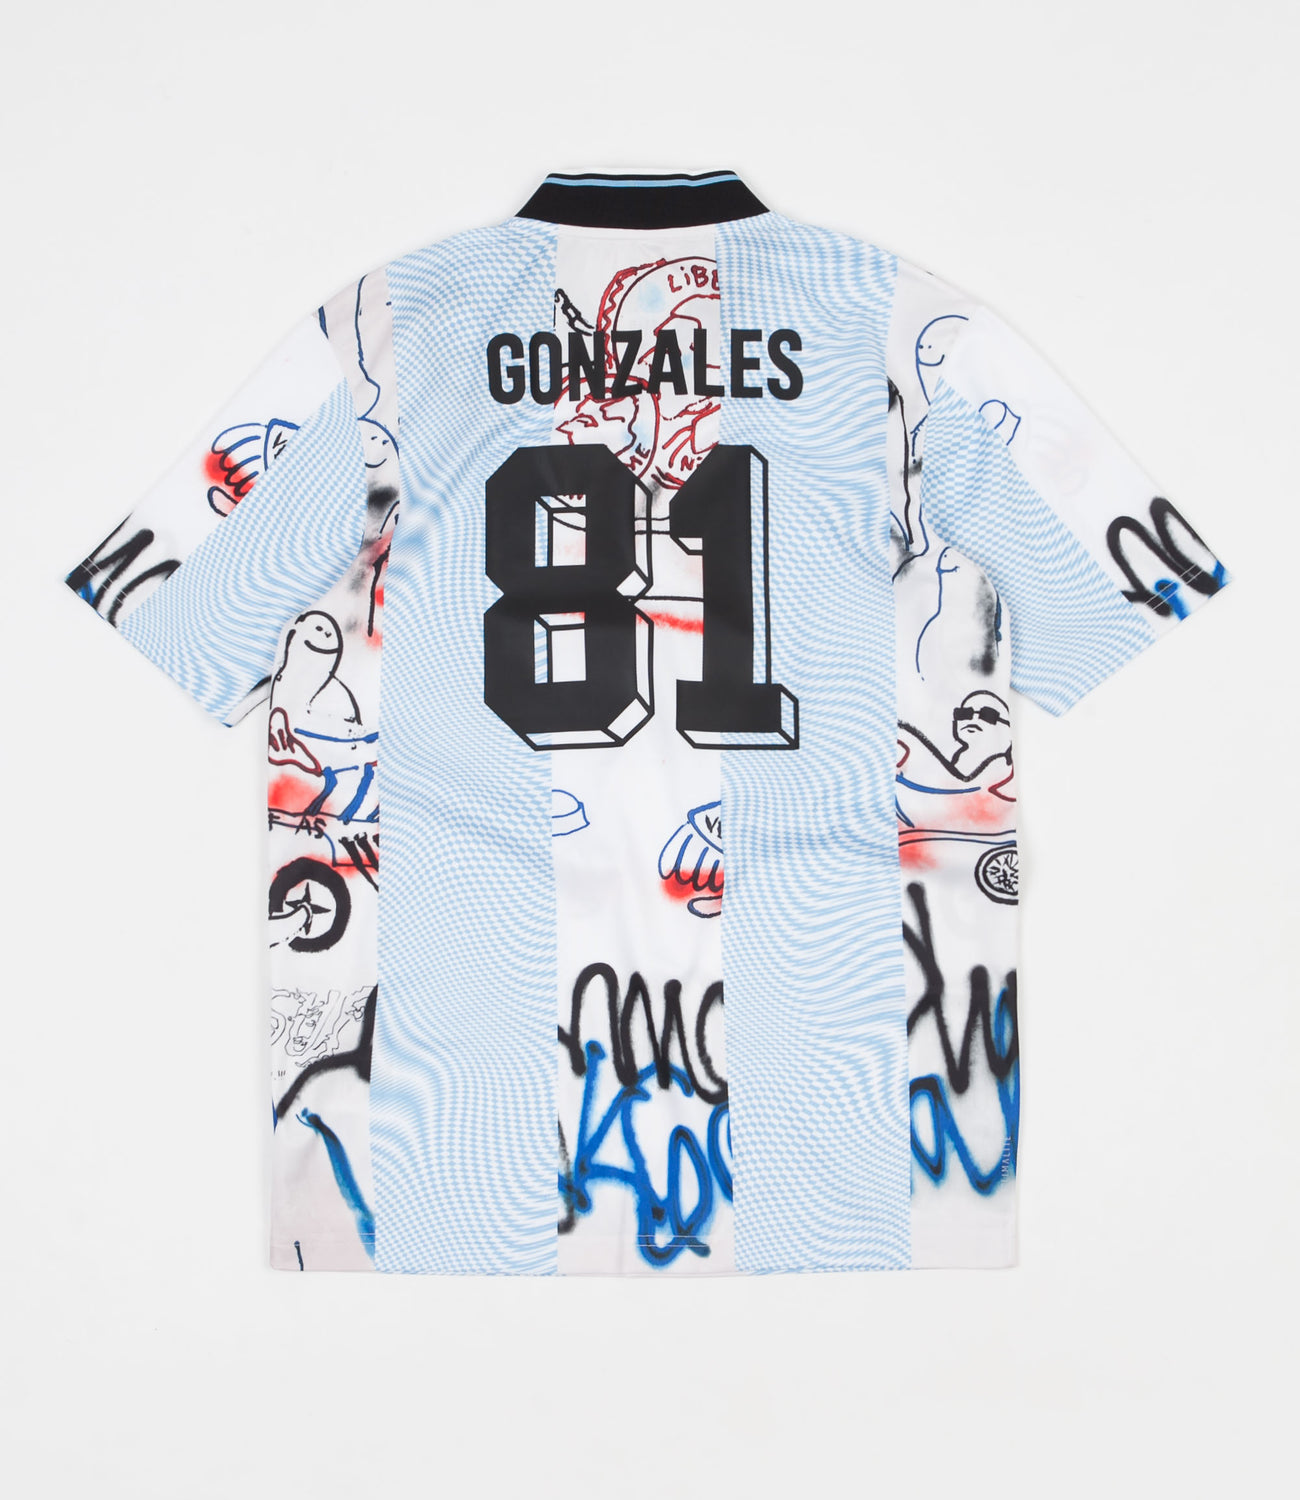 Adidas Gonzales Jersey - Black / White / Clear Blue / Flatspot